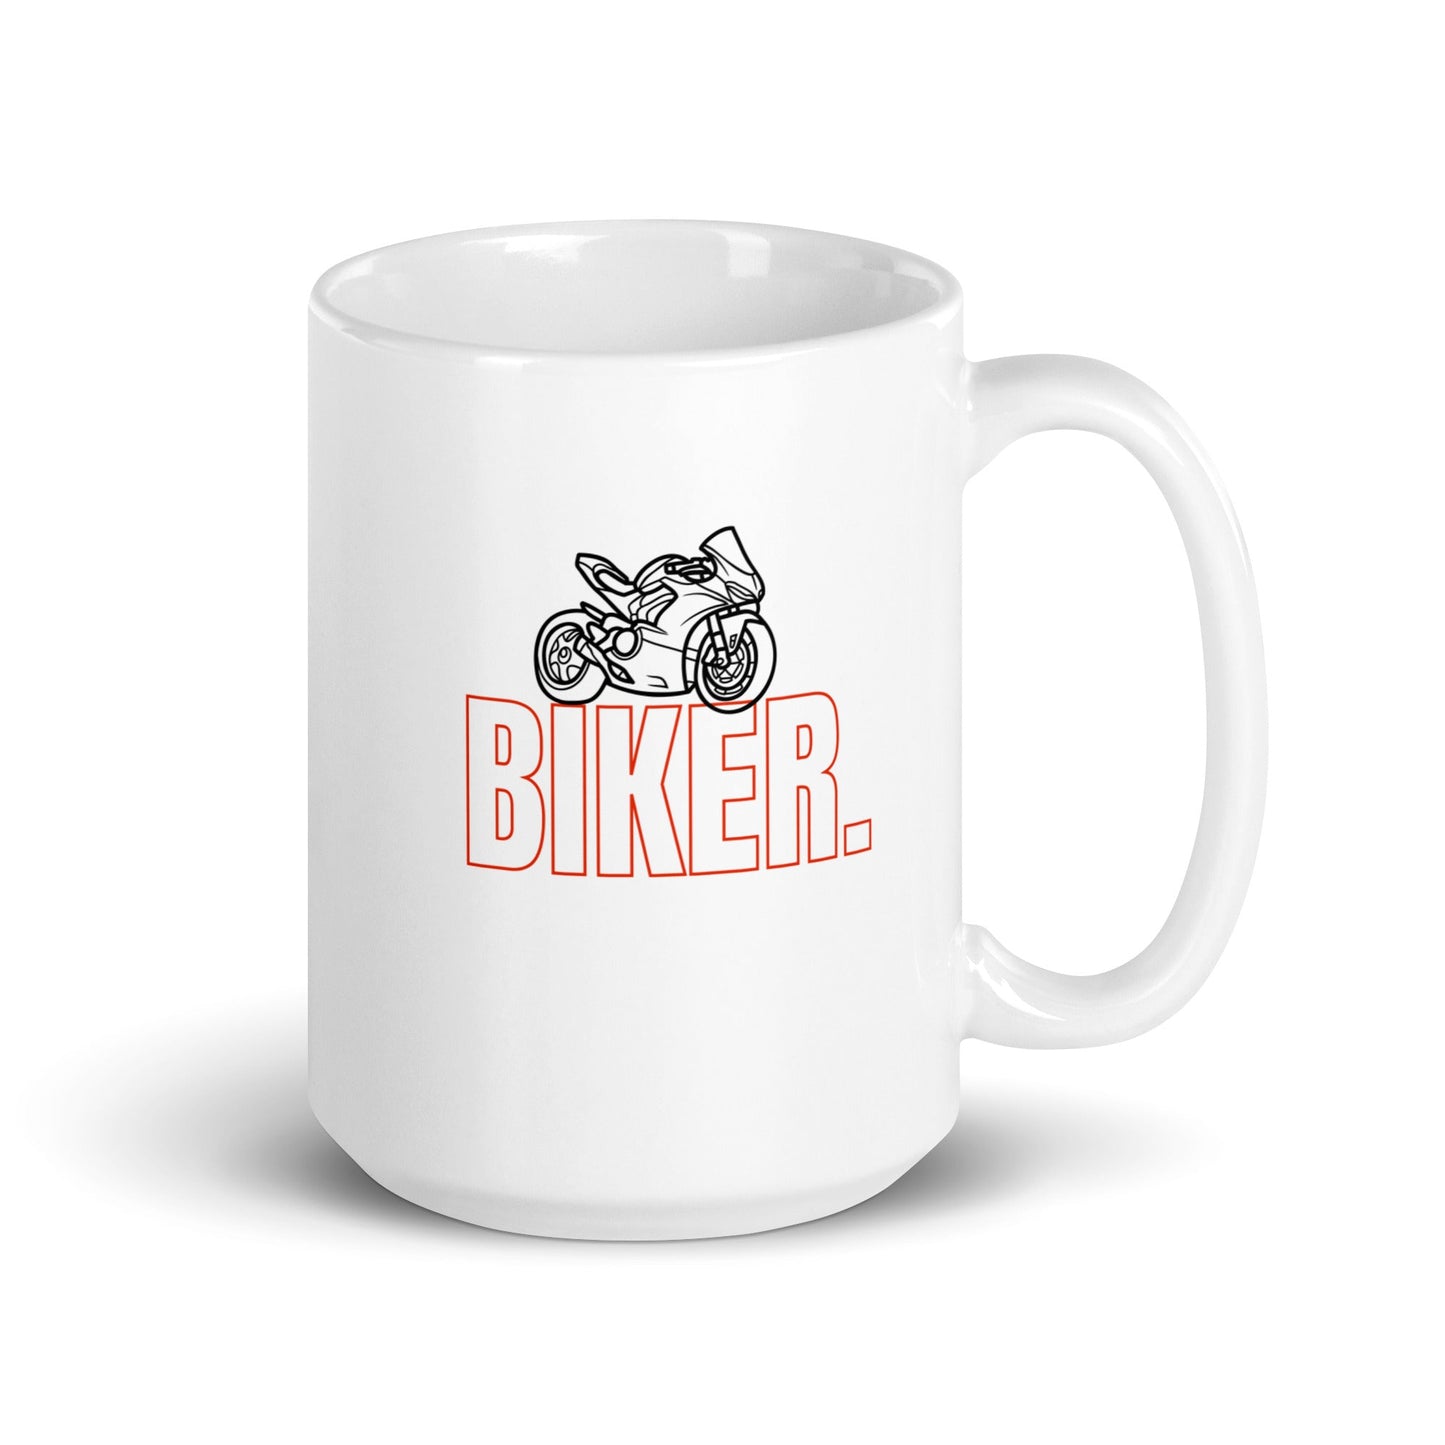 White glossy mug - Biker - The Vandi Company